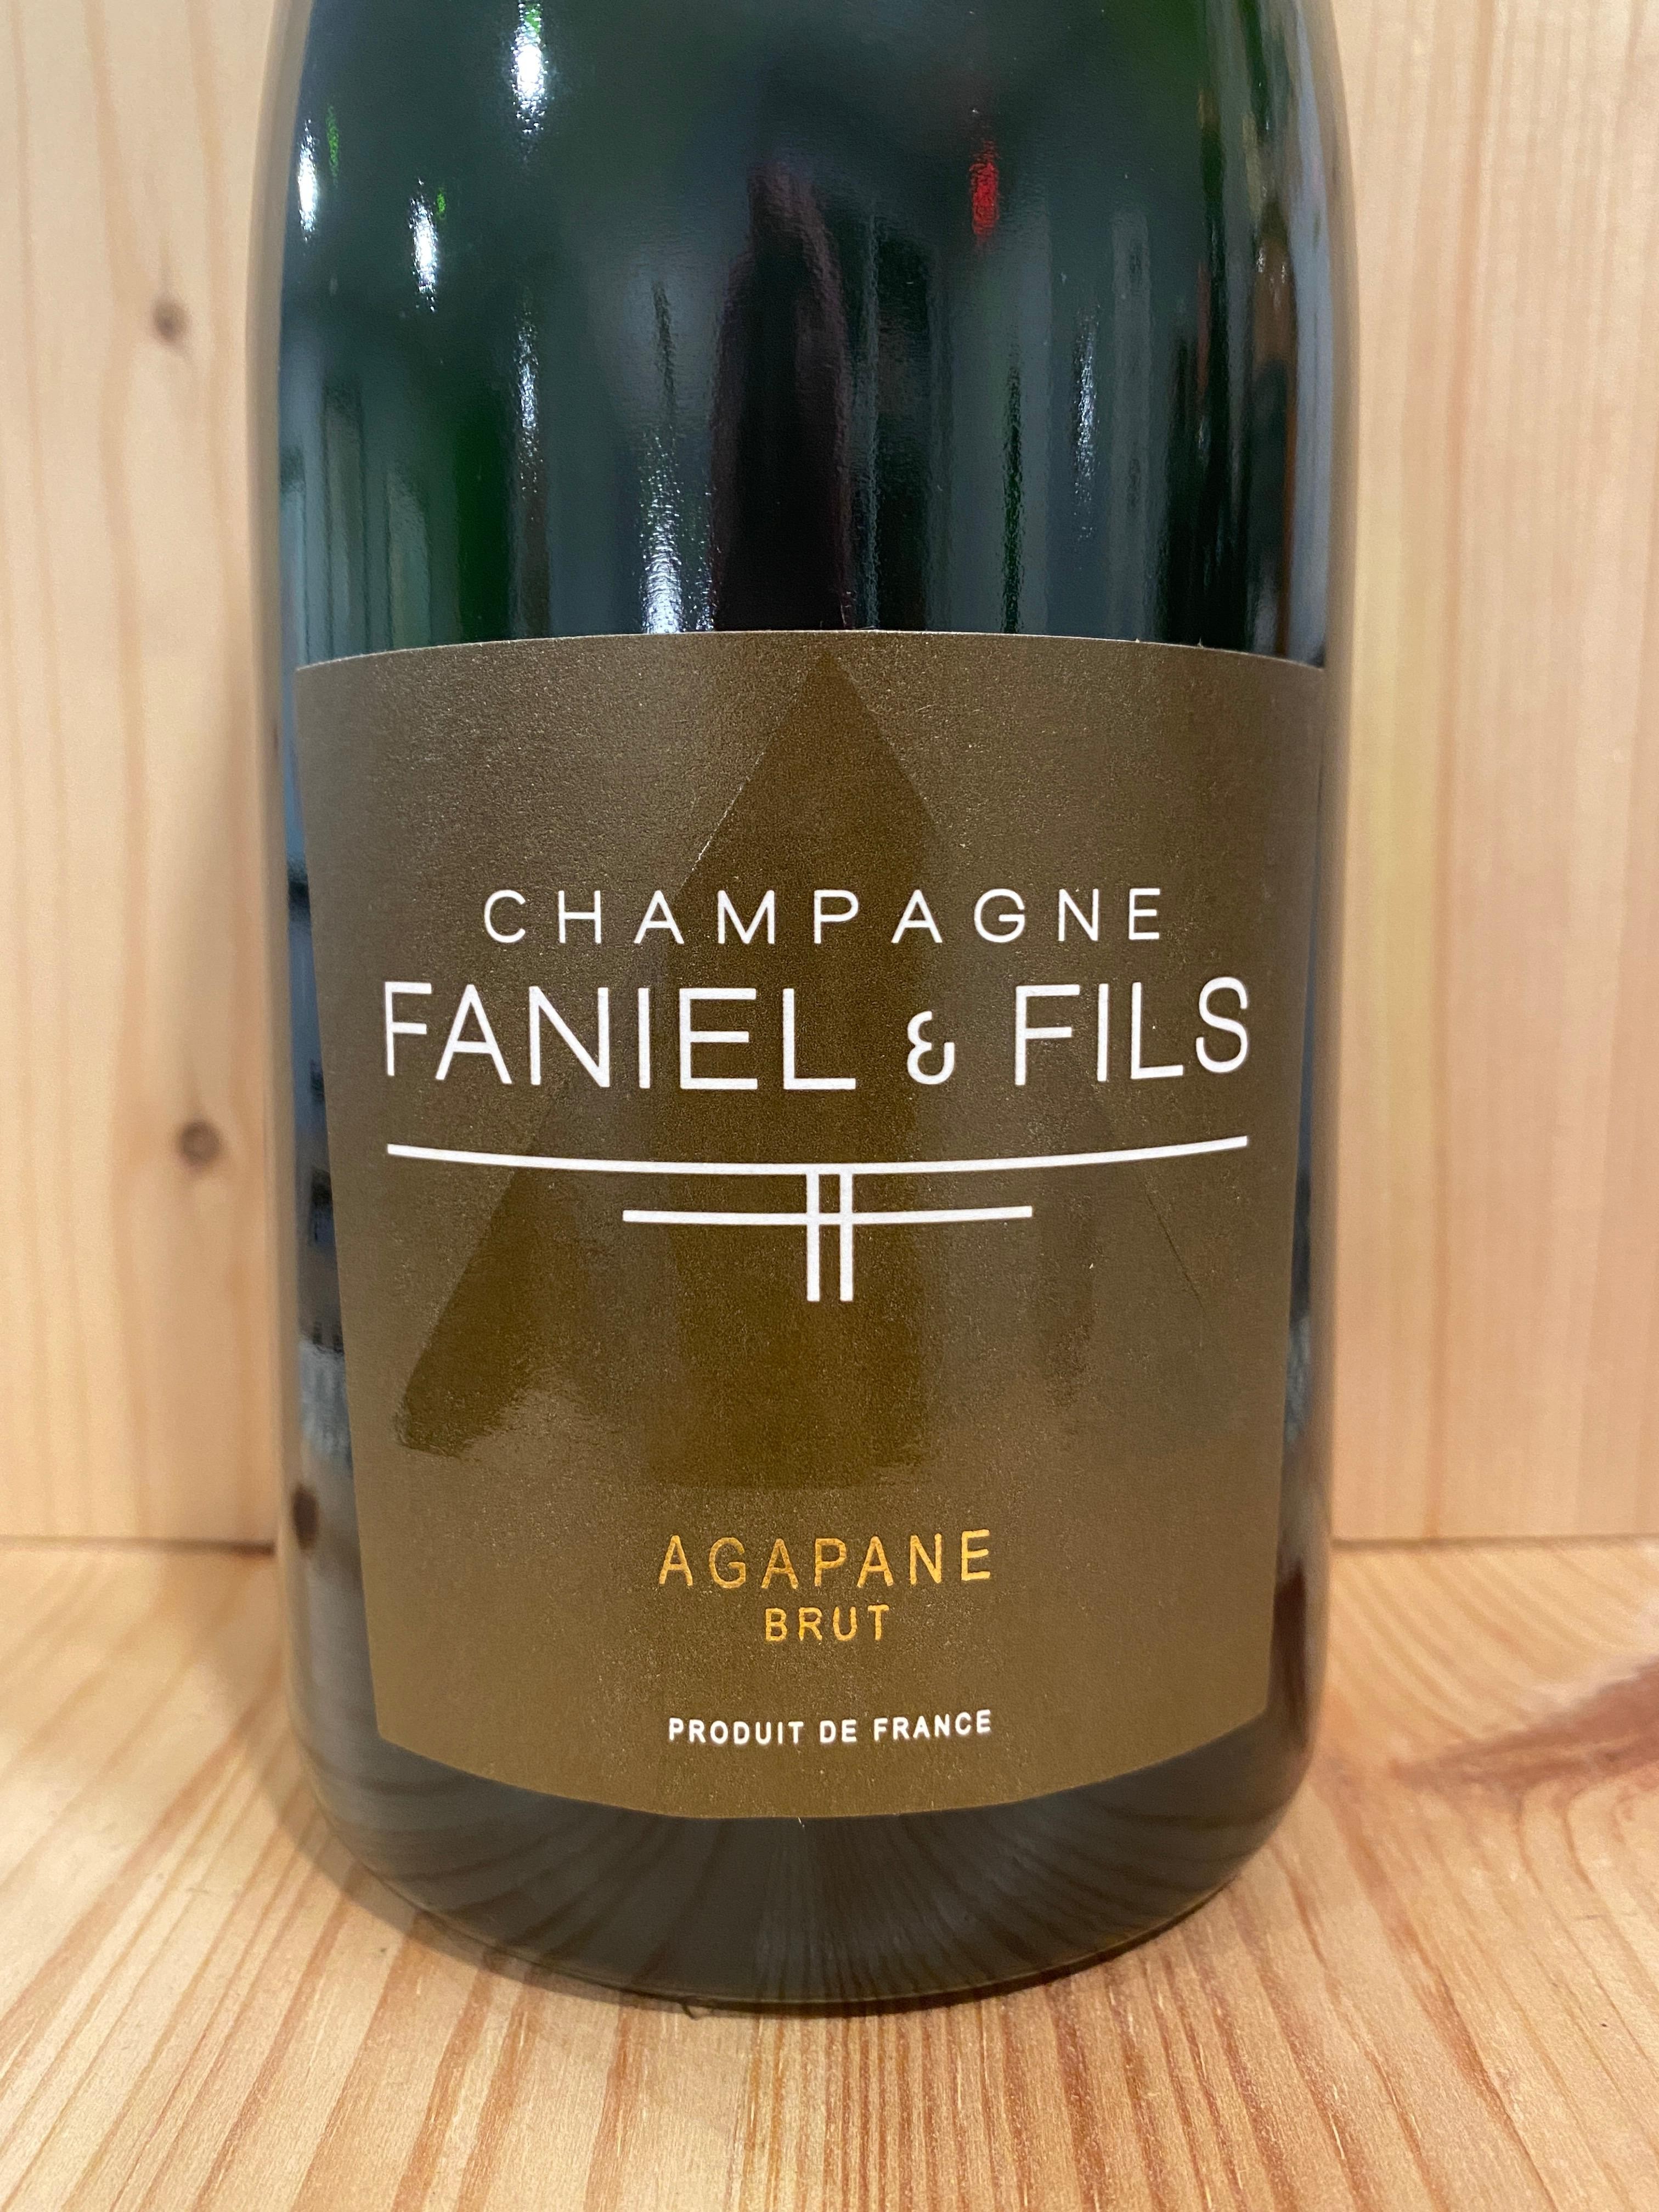 Faniel et Fils "Agrapane" Brut NV: Champagne, France